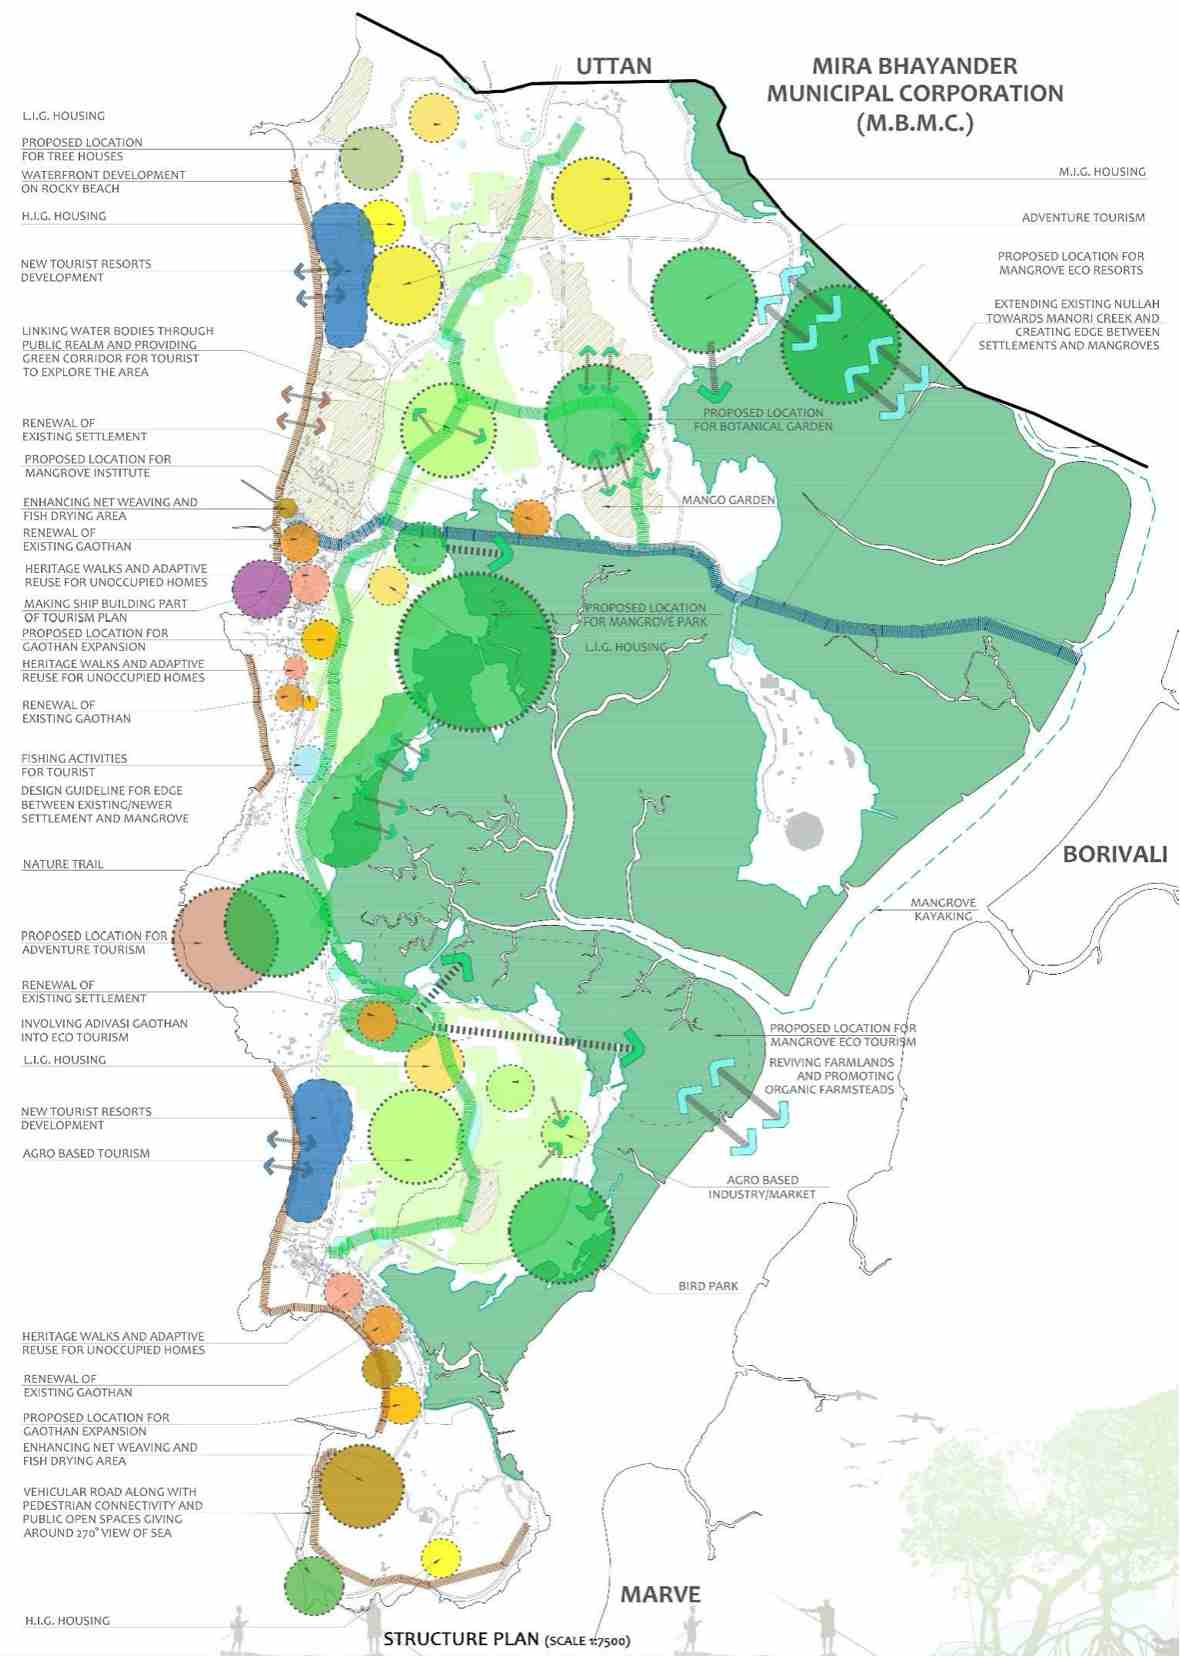 Structure Plan for Urban Design interventions in Gorai-Manori. Image: Author provided